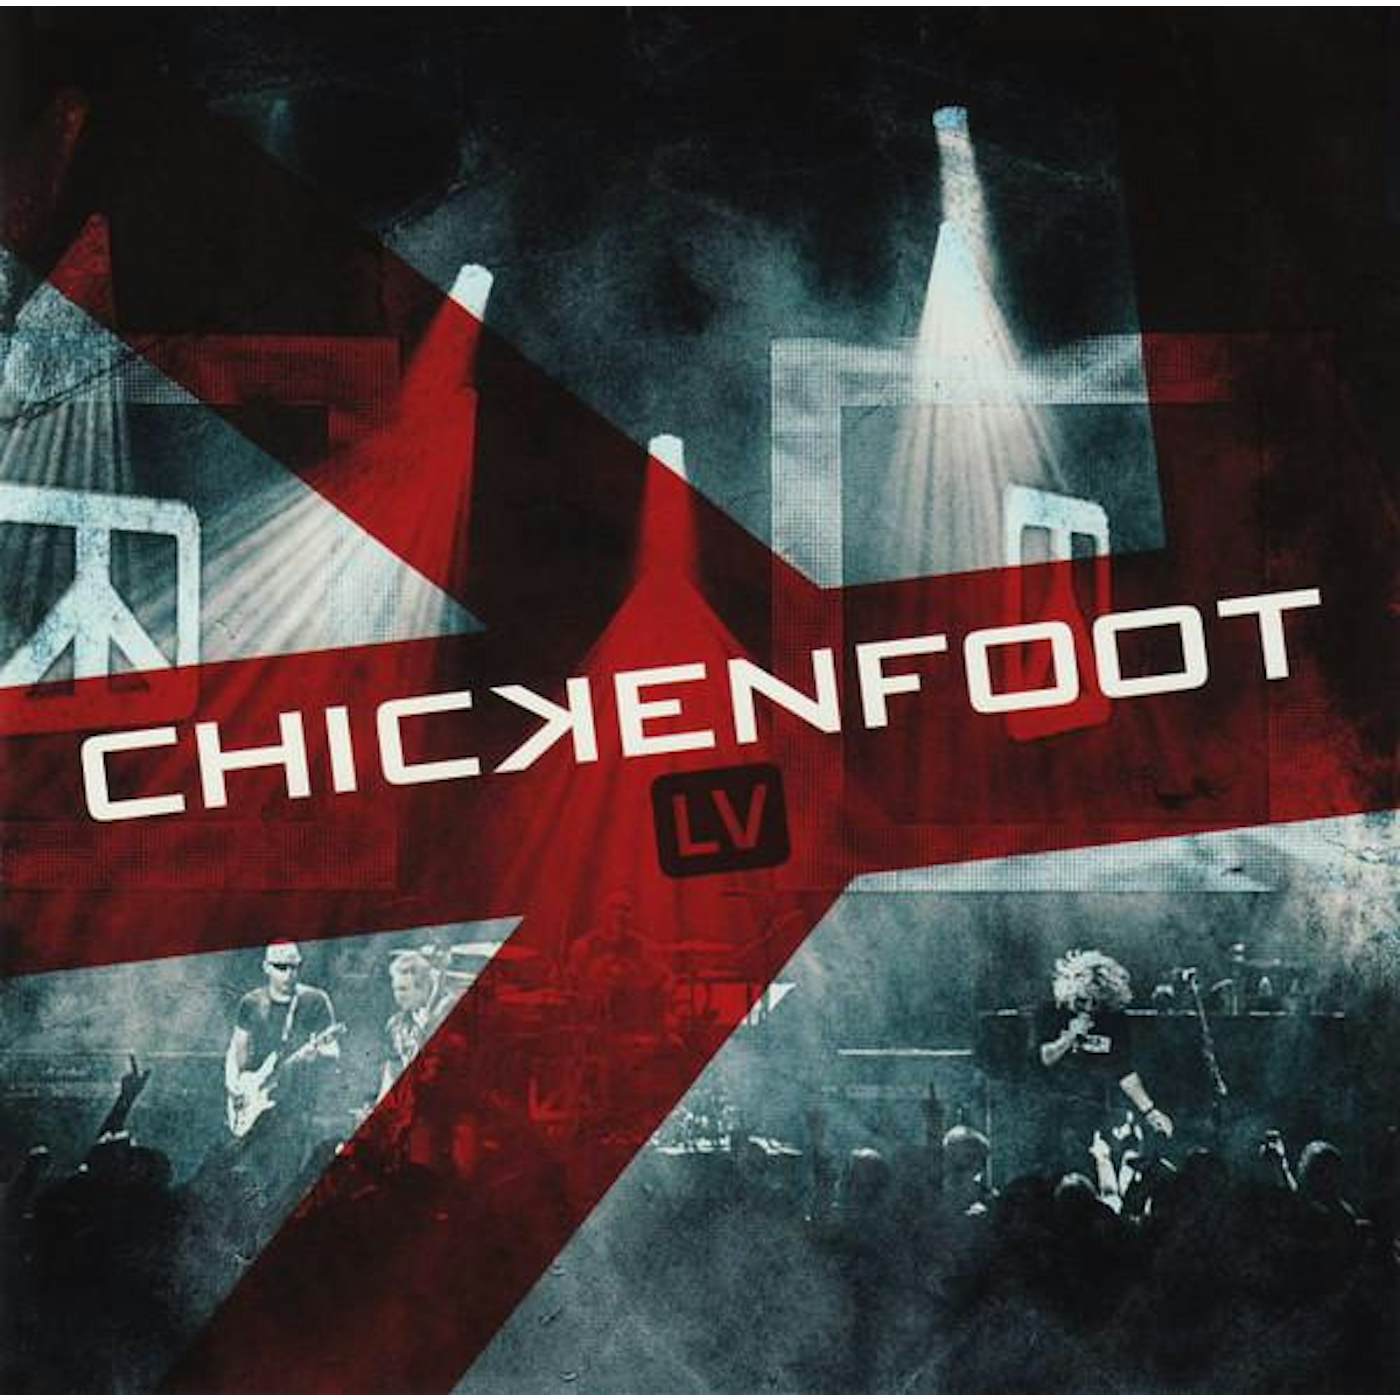 Chickenfoot LV (UK) (Vinyl)